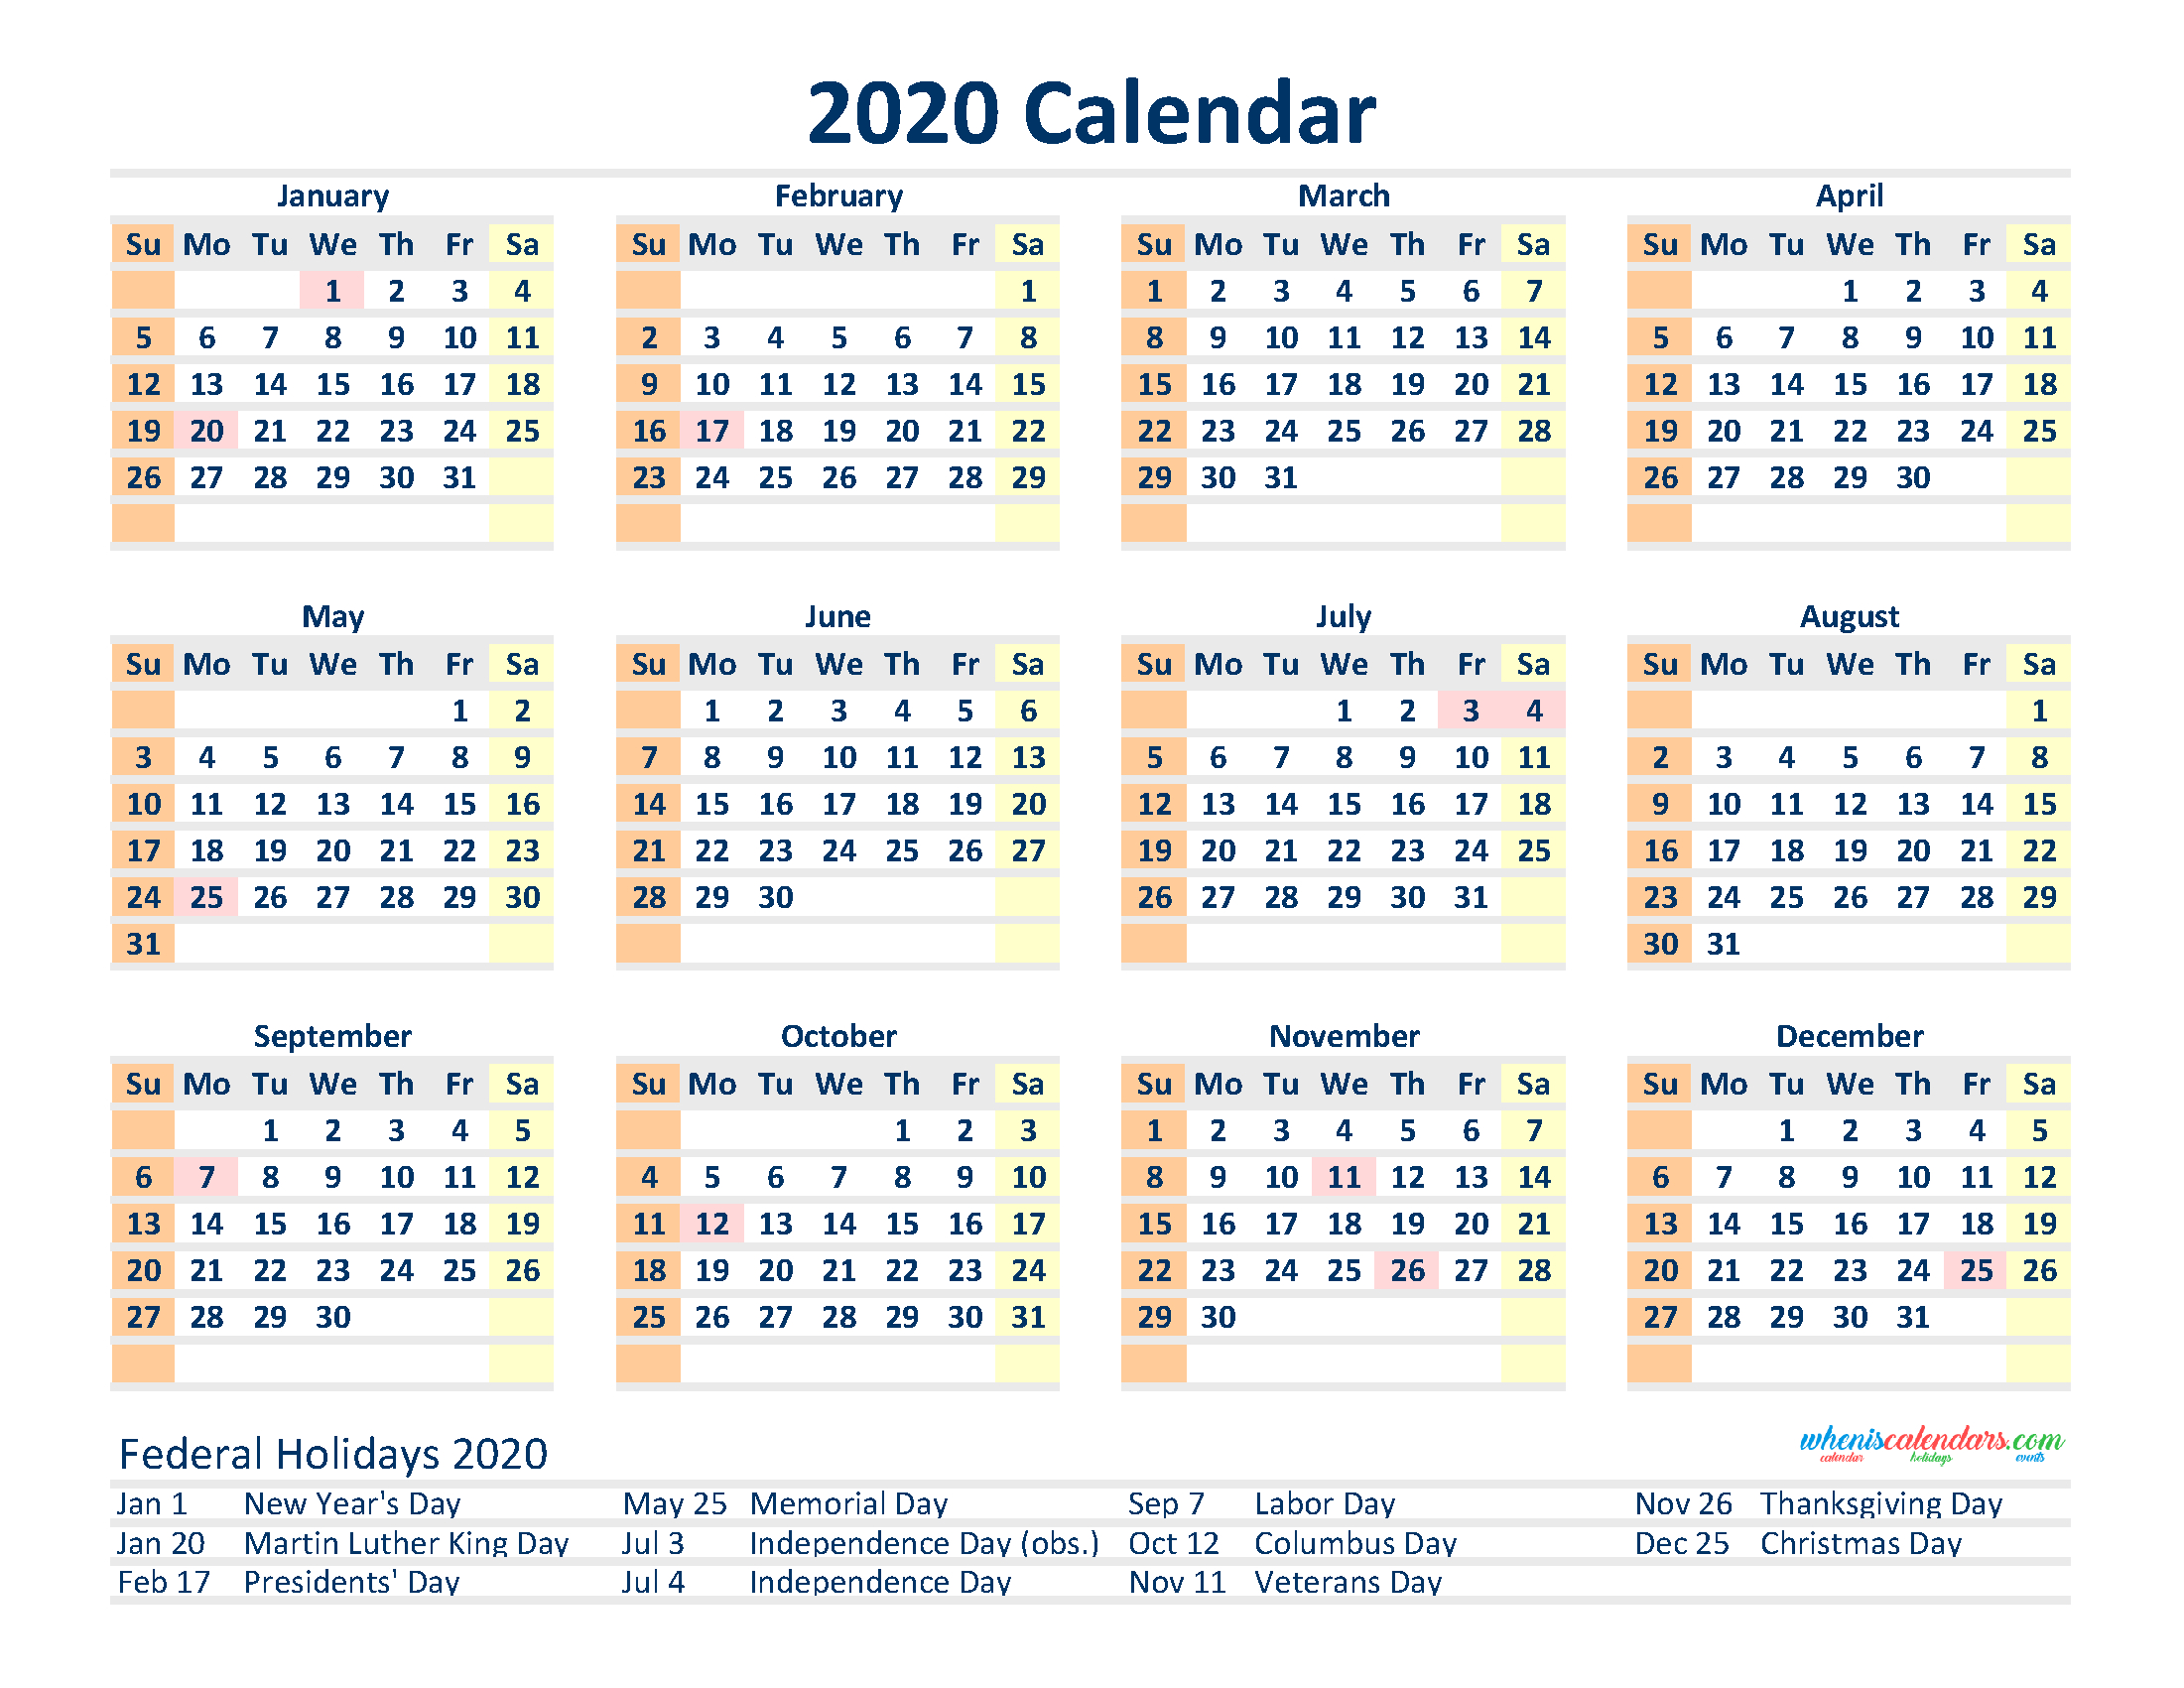 Free 2020 12 Month Calendar Printable Pdf, Excel, Image  12 Month Calendar To Print